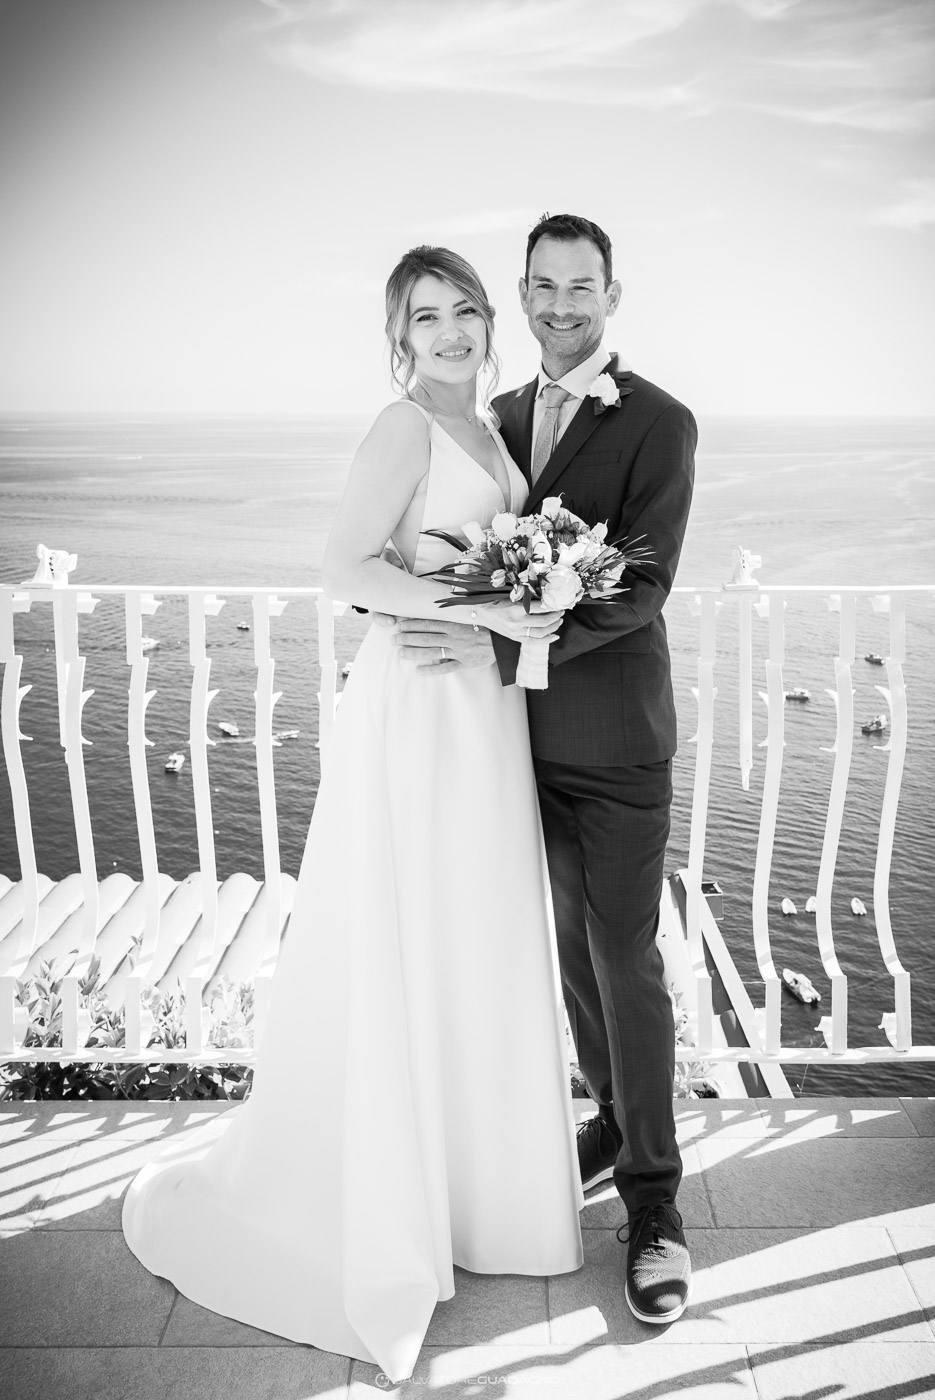 Wedding - Marriage - Family - Portrait photography - Positano - Amalfi Coast 